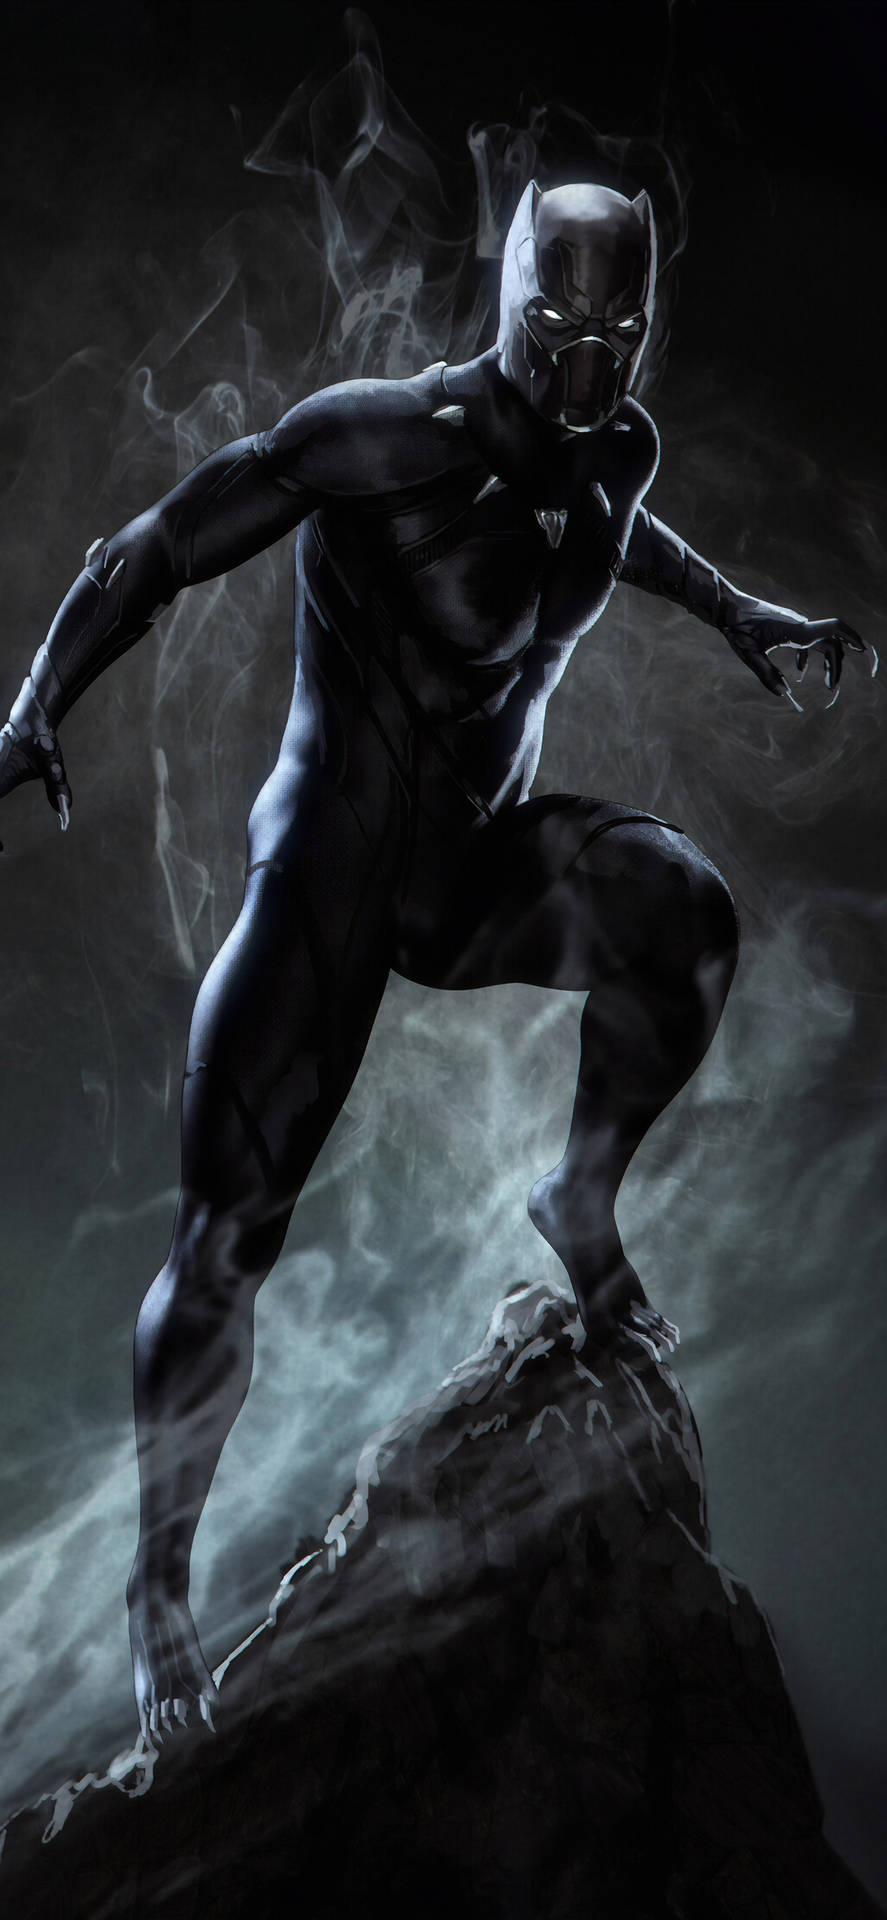 Download Black Panther On Rock Superhero Iphone Wallpaper 